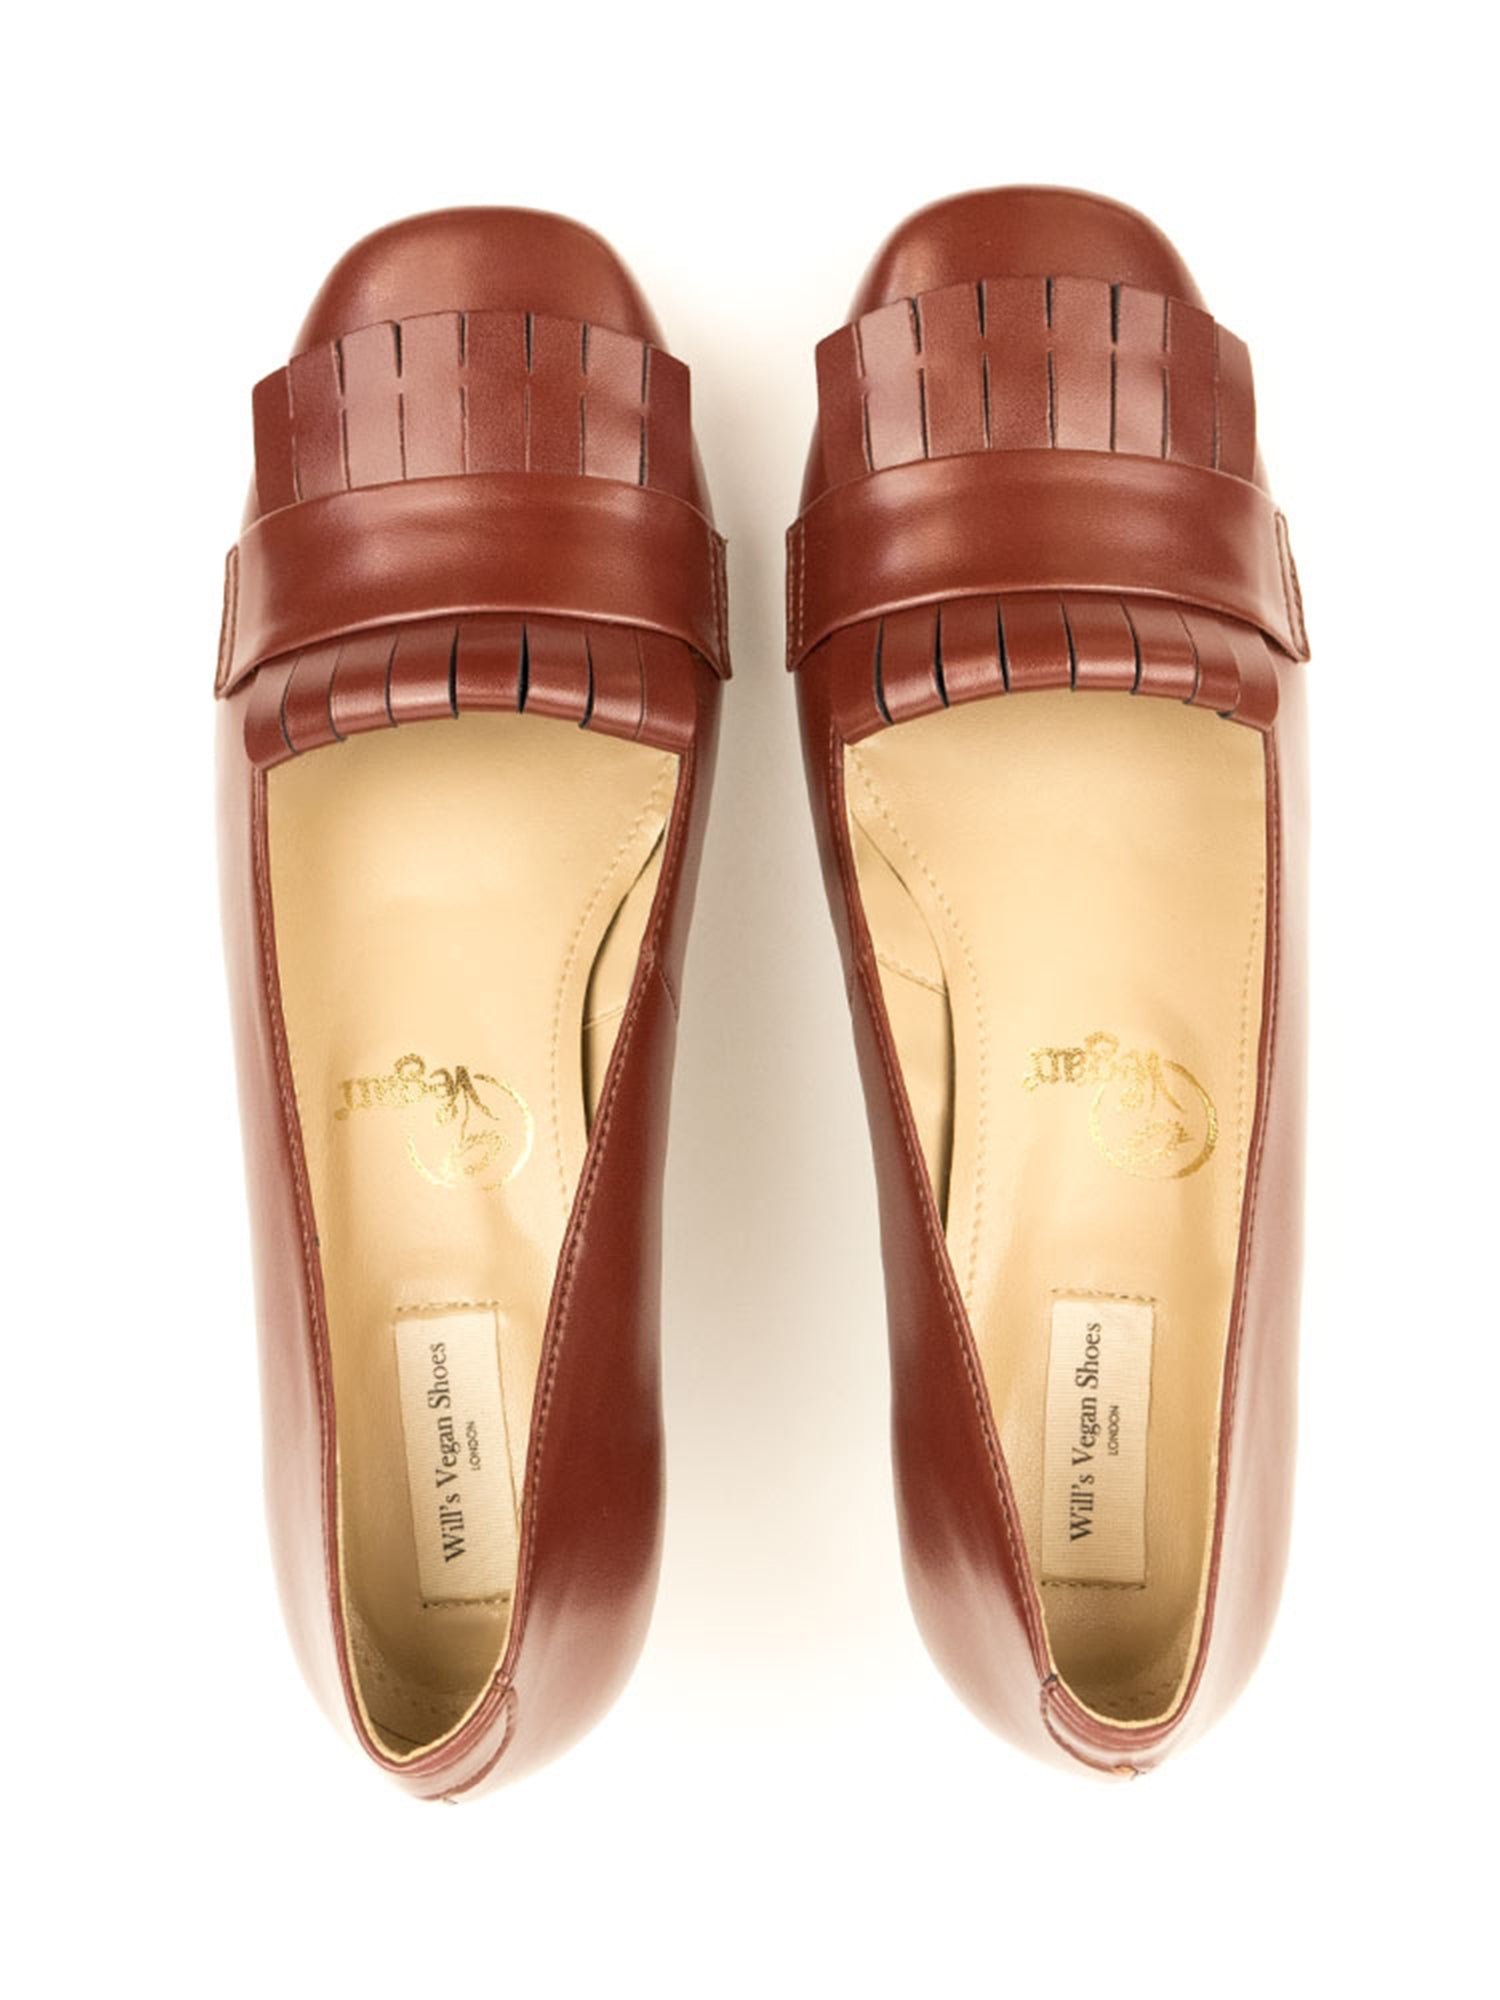 Lulus Taylor Ankle Strap Heels Women's 10 Rose Gold Vegan Leather Block Heel  | eBay